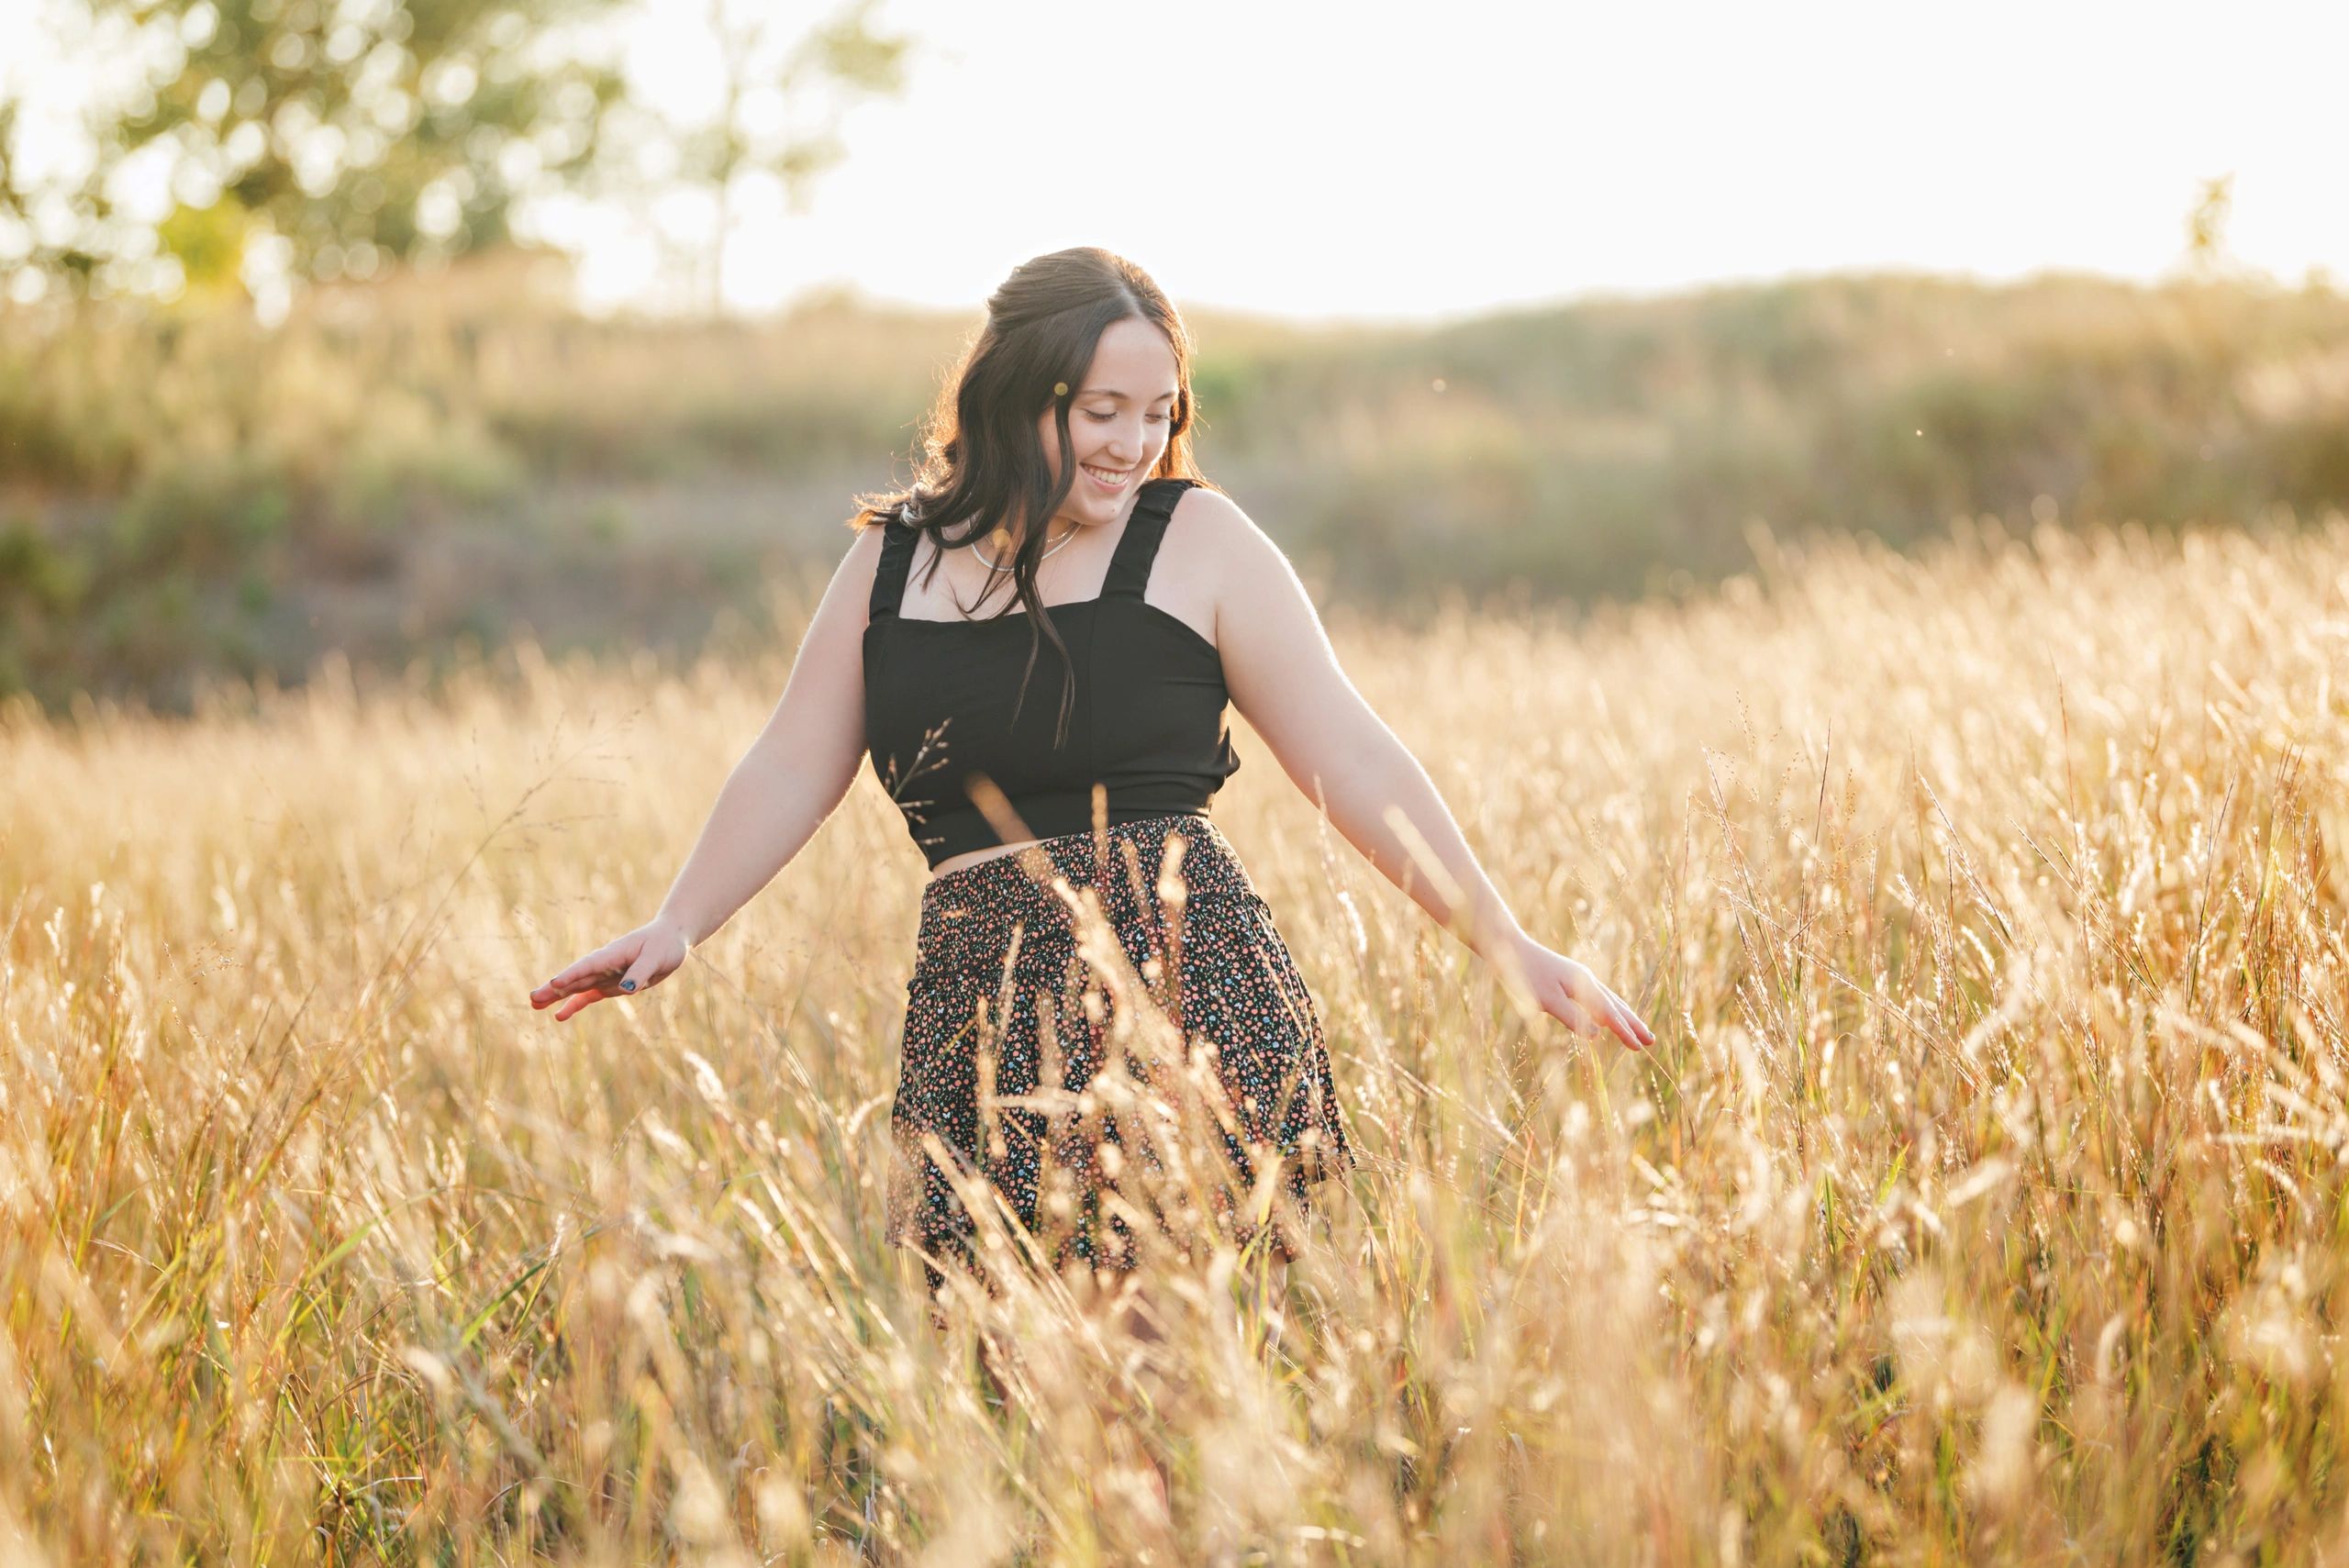 High school senior girl dancing in tall grasses